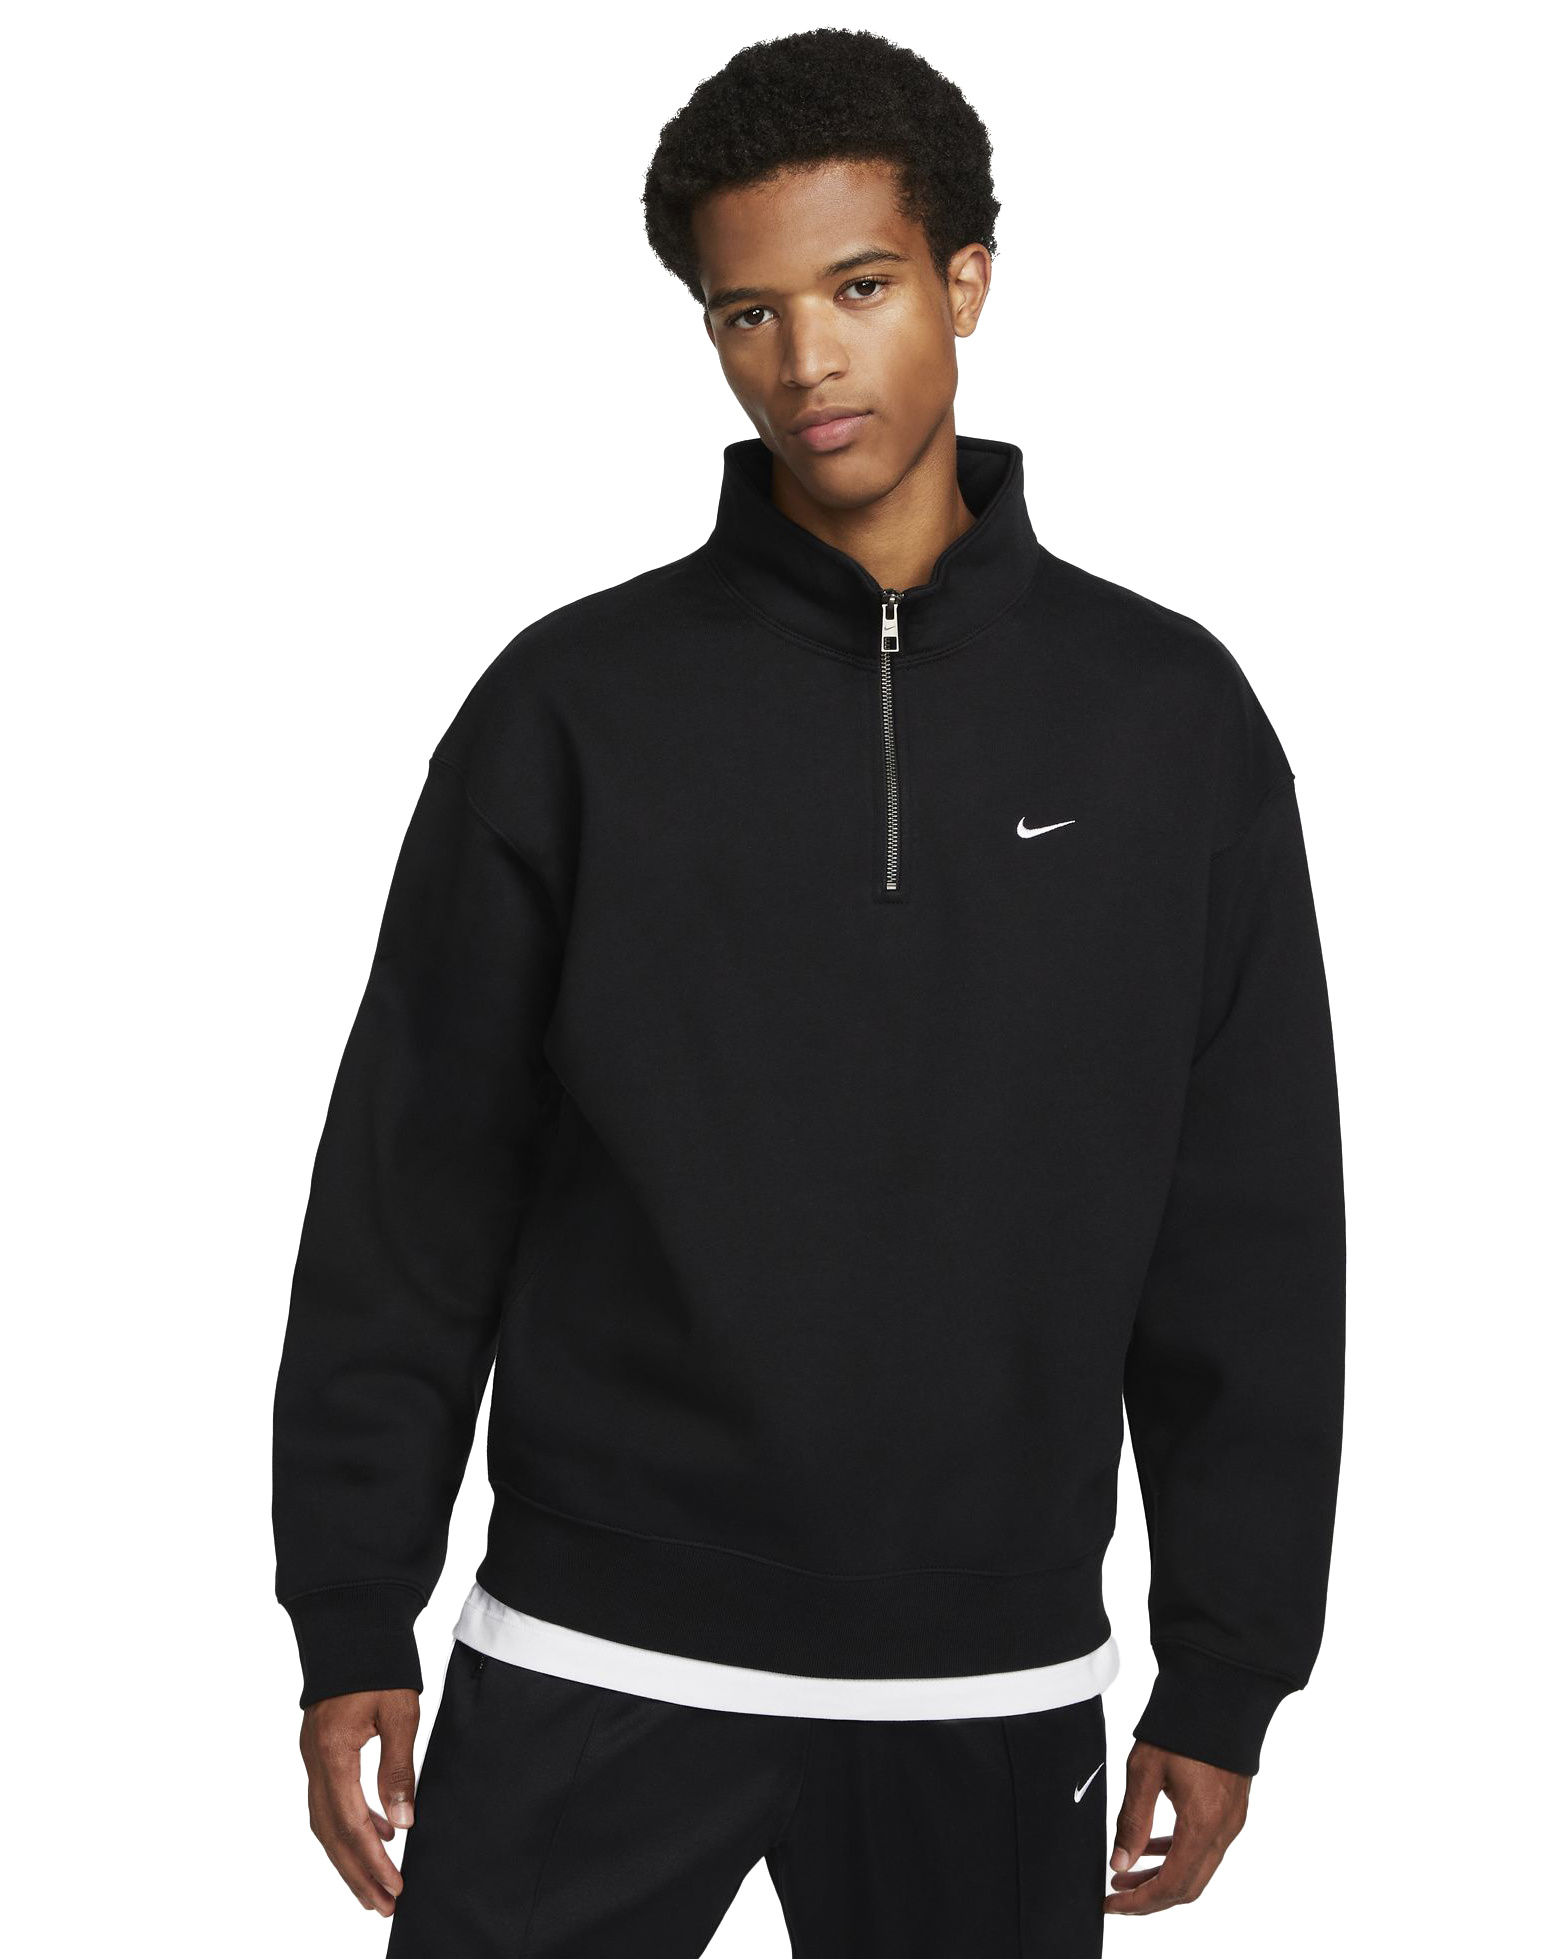 Nike Solo 1/4 Zip Pullover Jacket - Black/White - MODA3